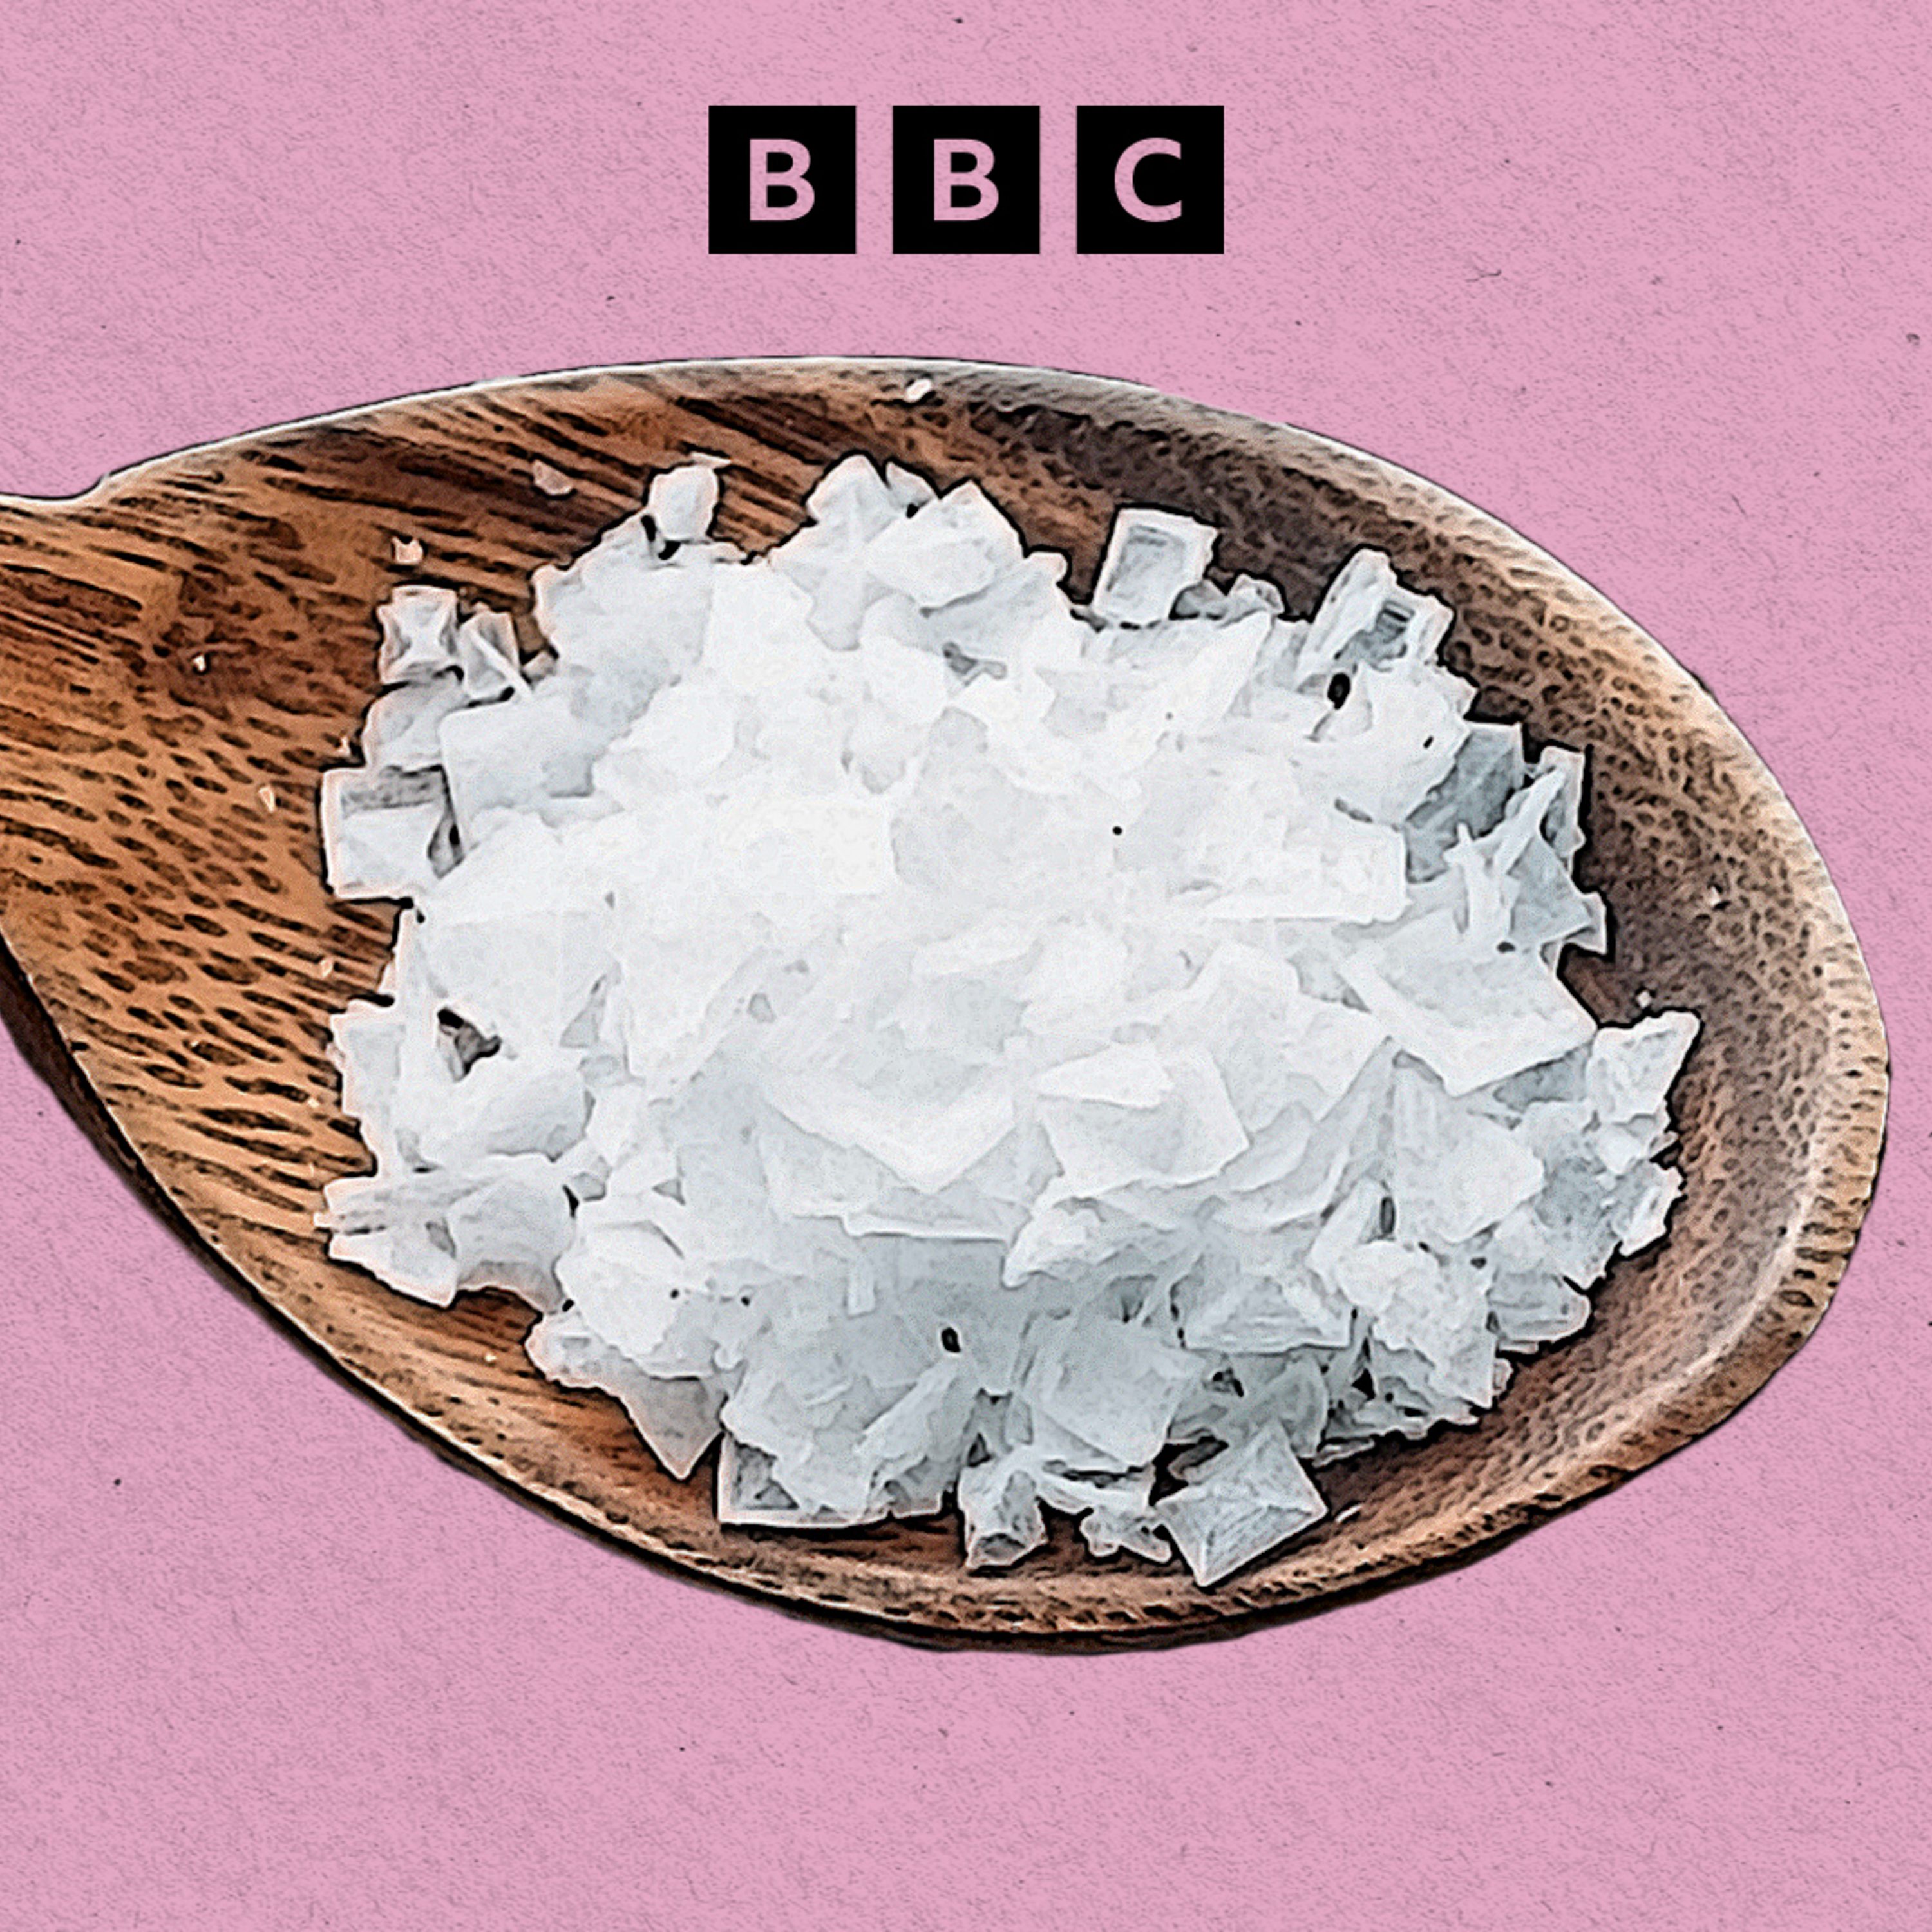 How did salt get so gourmet?